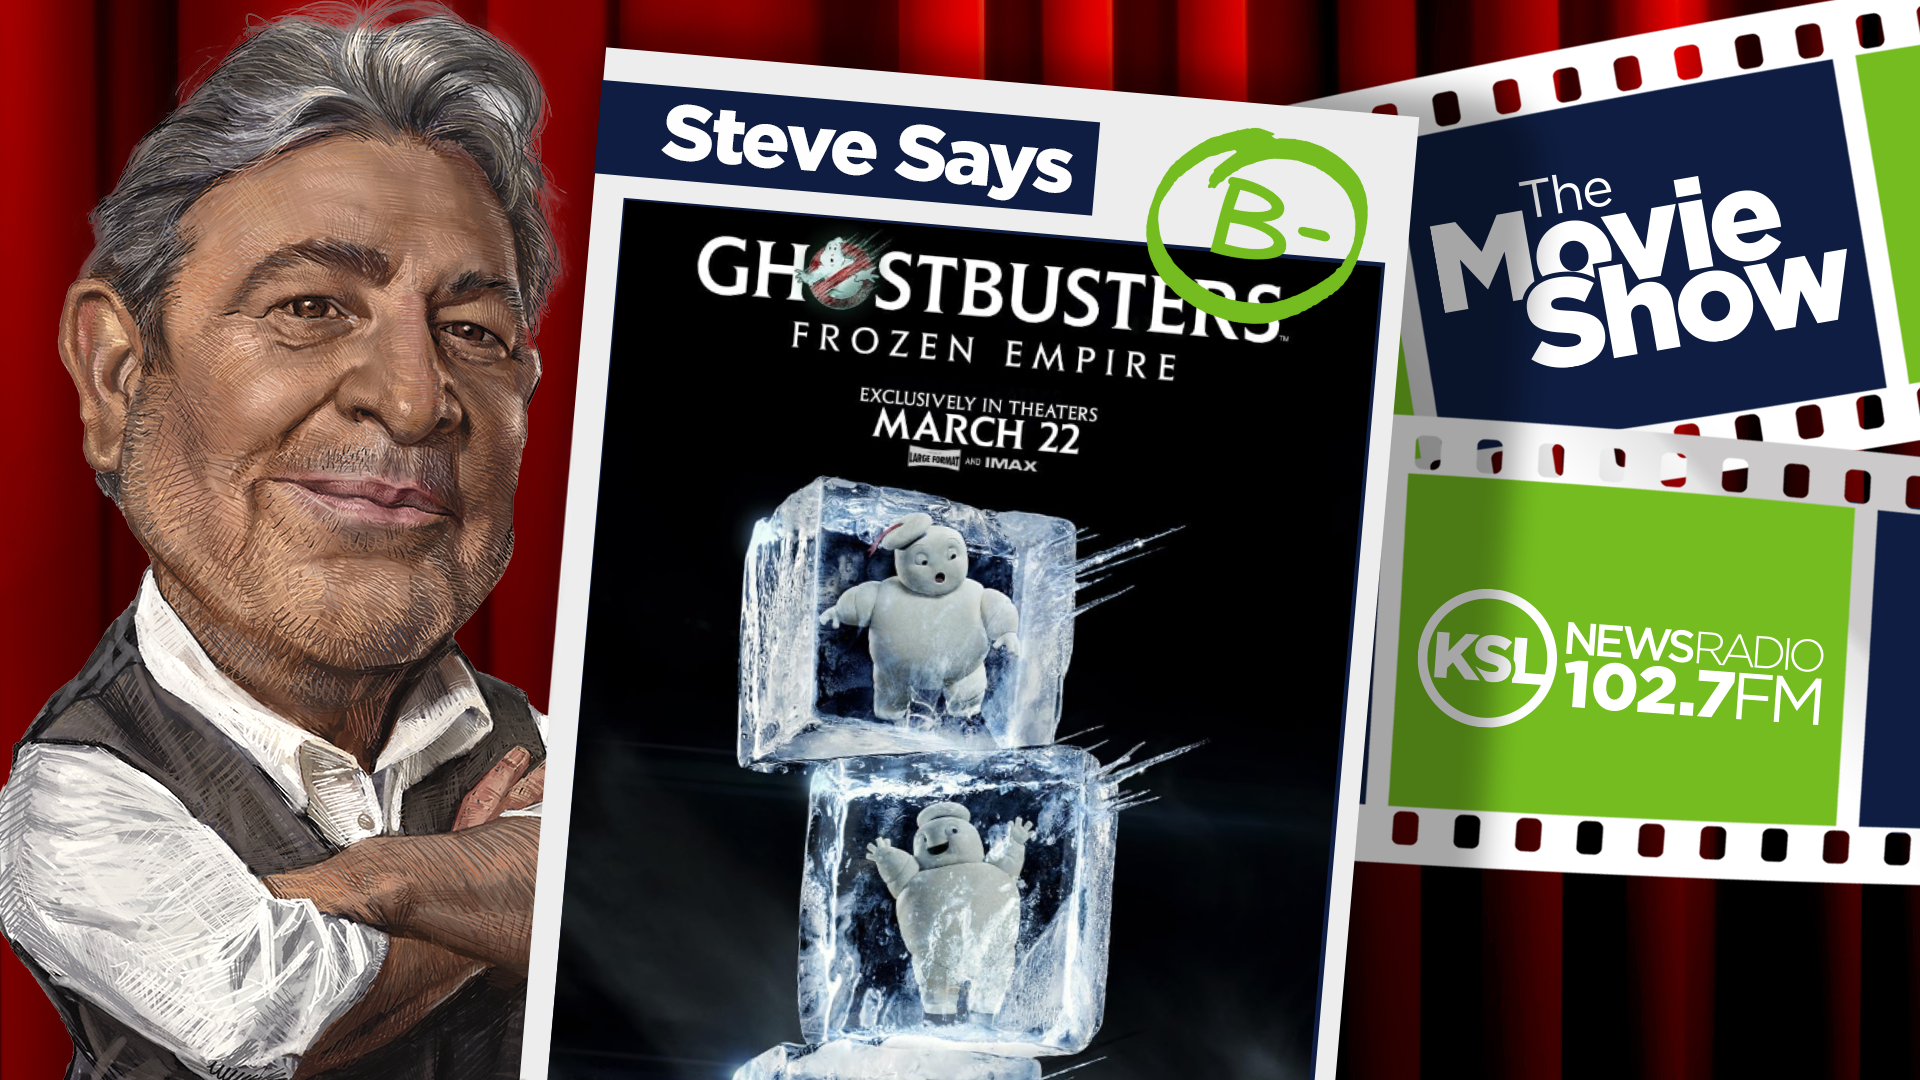 ghostbusters: frozen empire movie poster next to ksl movie show host steve salles...